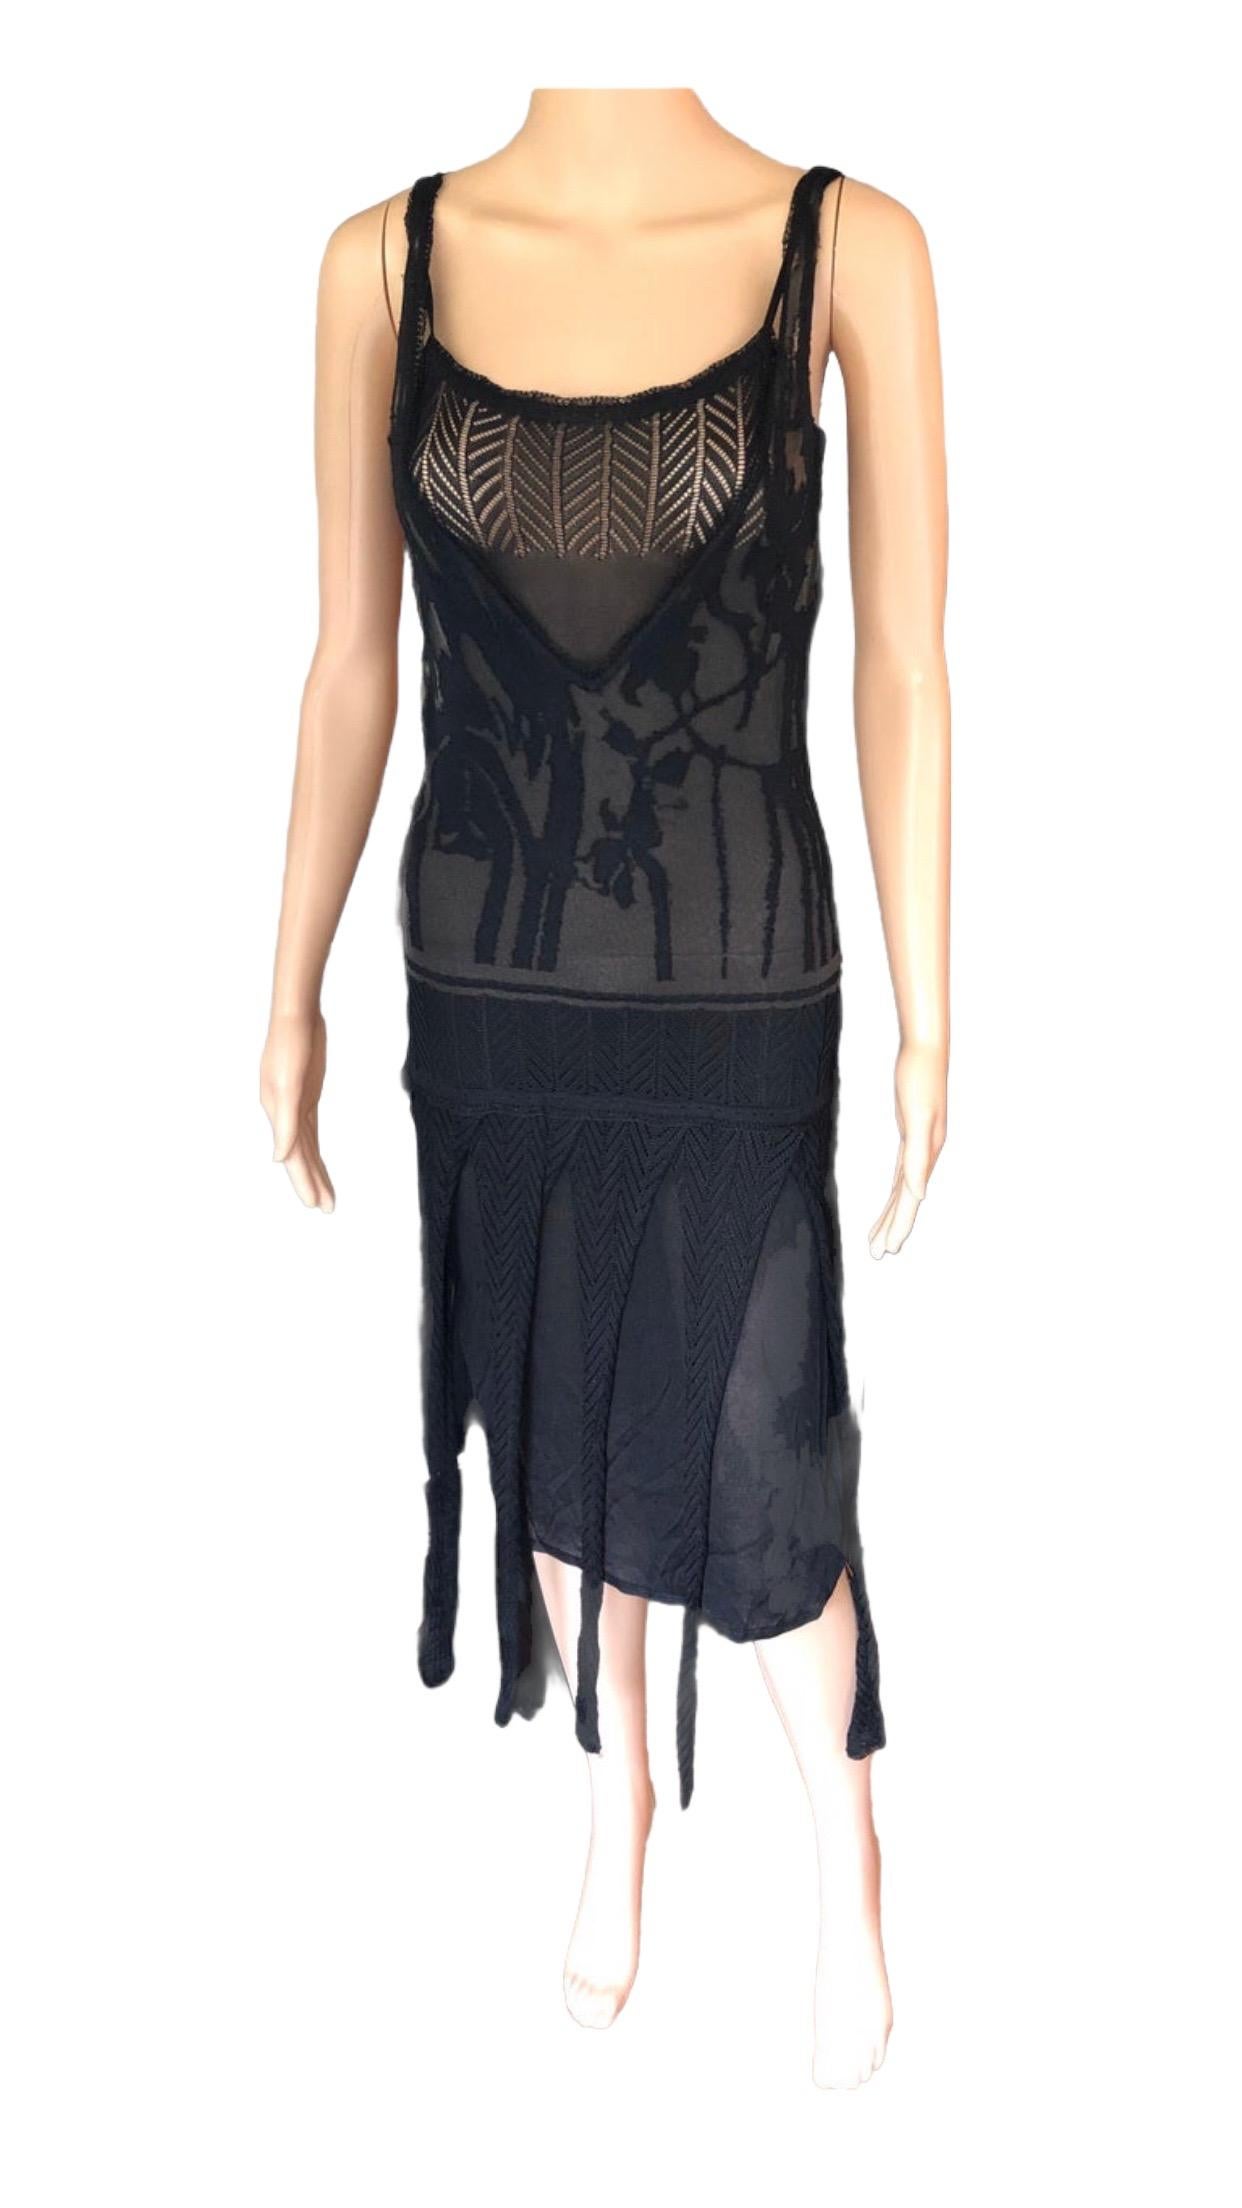 Christian Lacroix Vintage Semi-Sheer Crochet Mesh Knit Fringed Black Dress For Sale 2